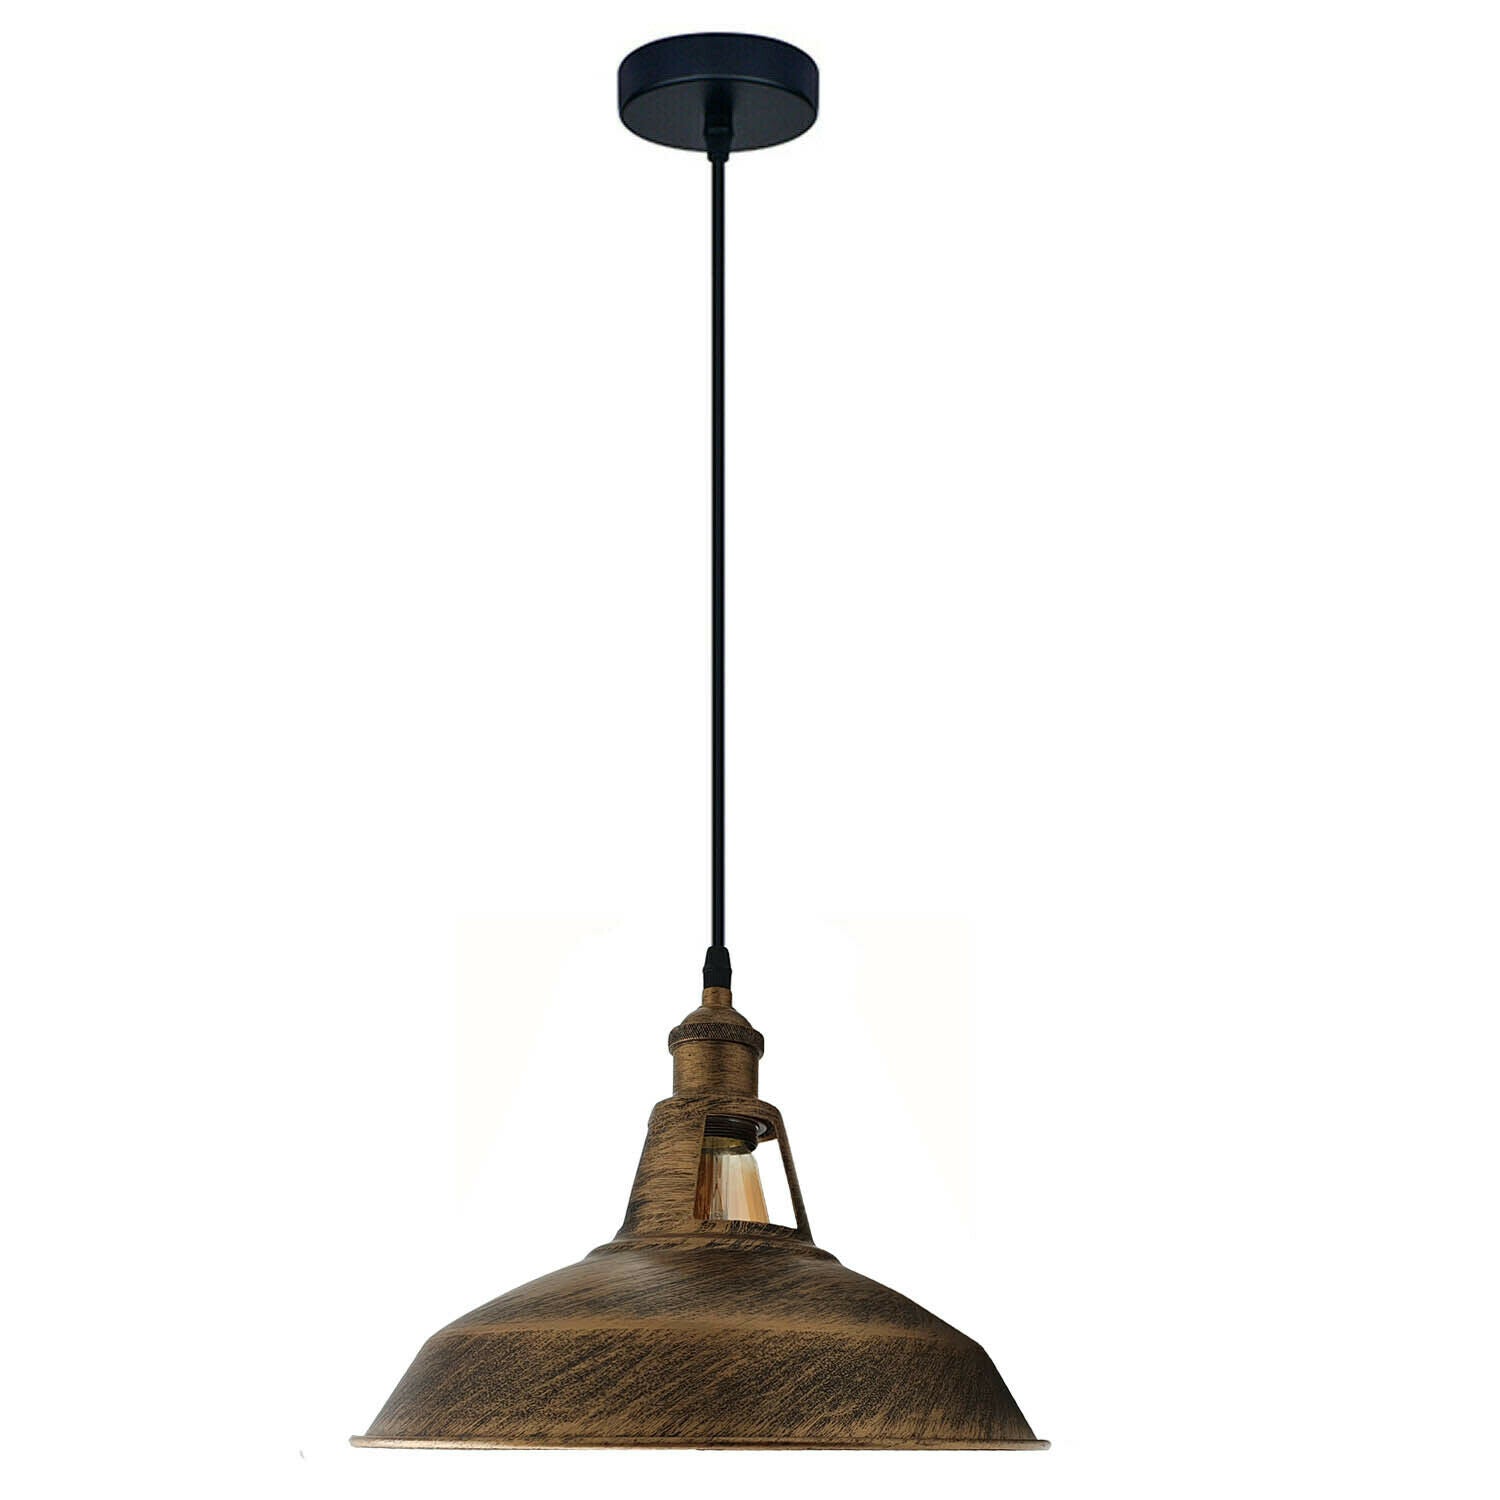 Brushed Copper Industrial Barn Slotted Pendant Hanging Lighting